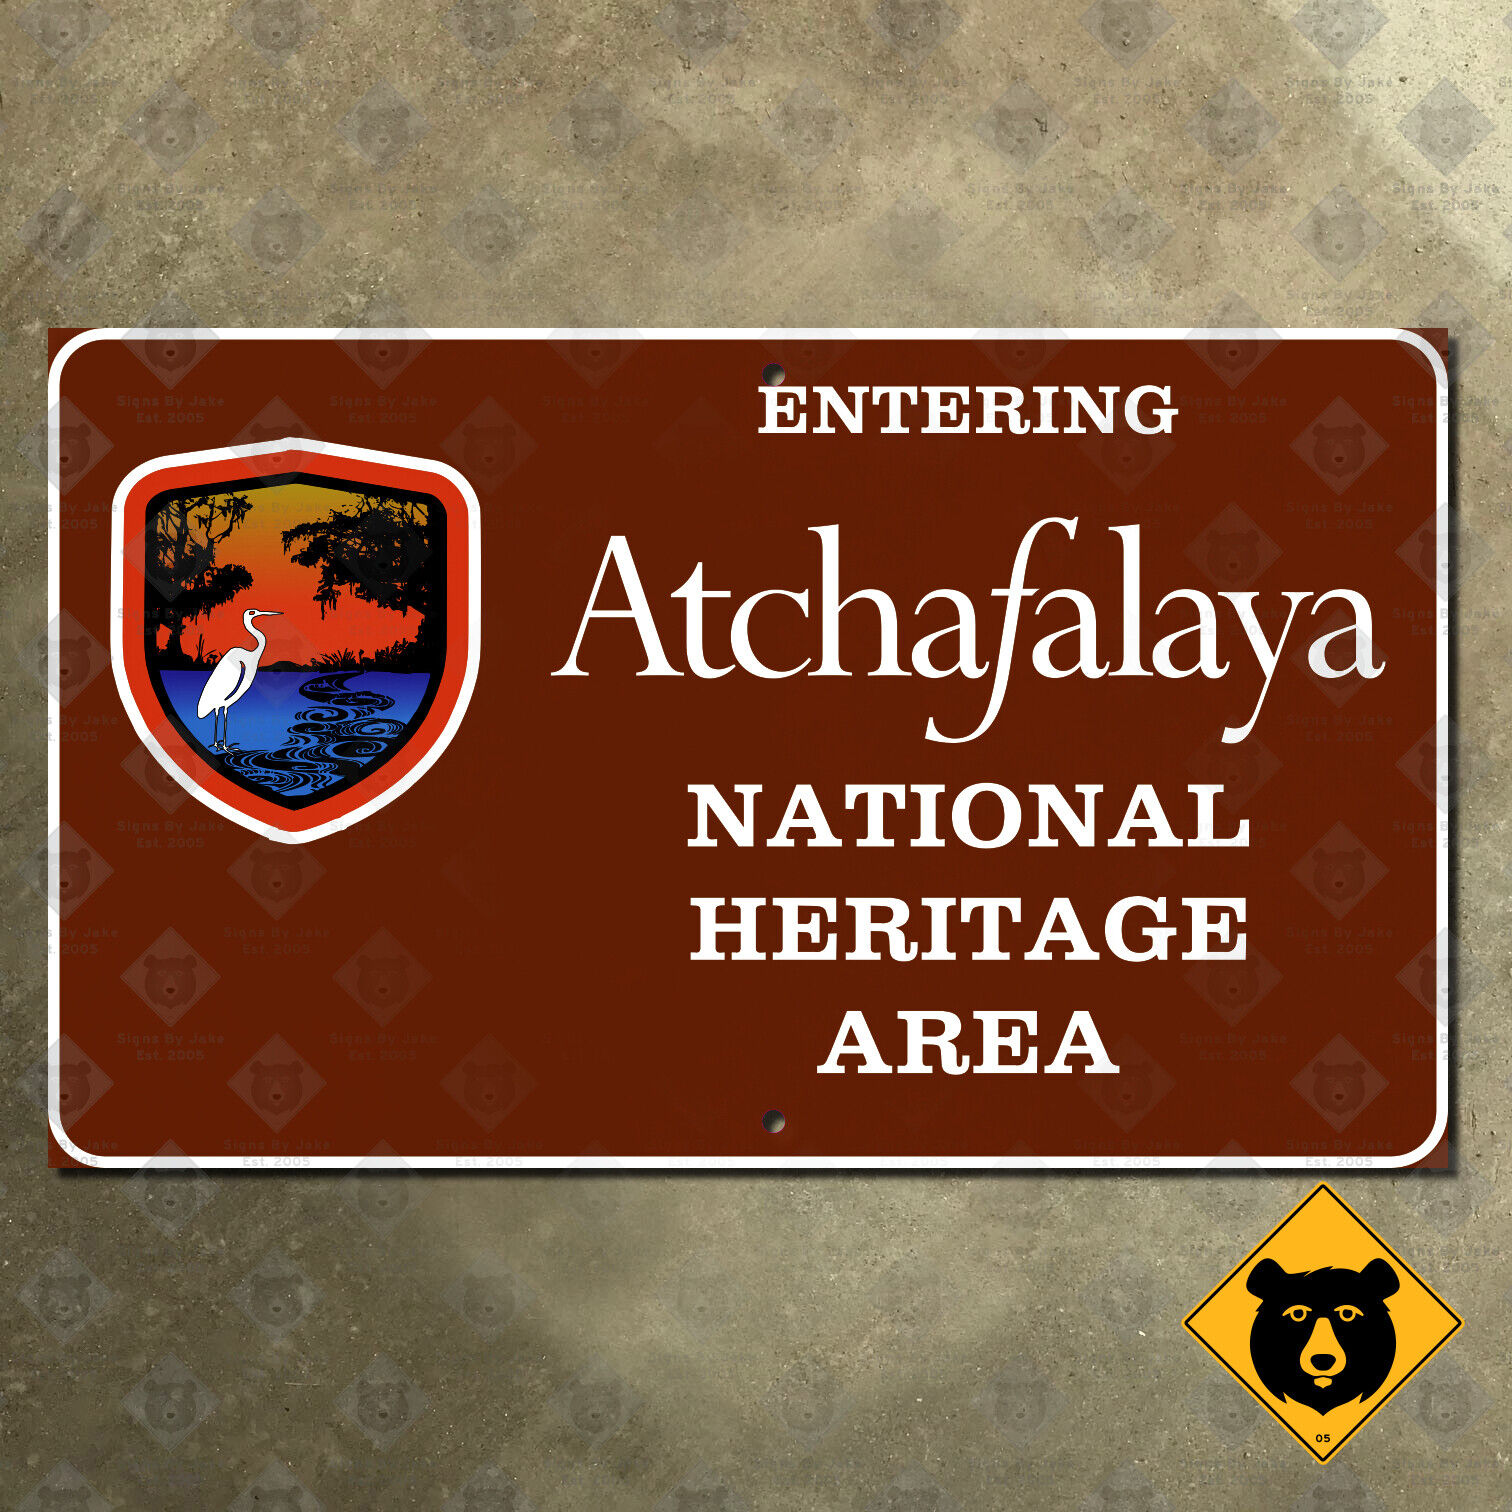 Louisiana Entering Atchafalaya National Heritage Area sign highway marker 22x13